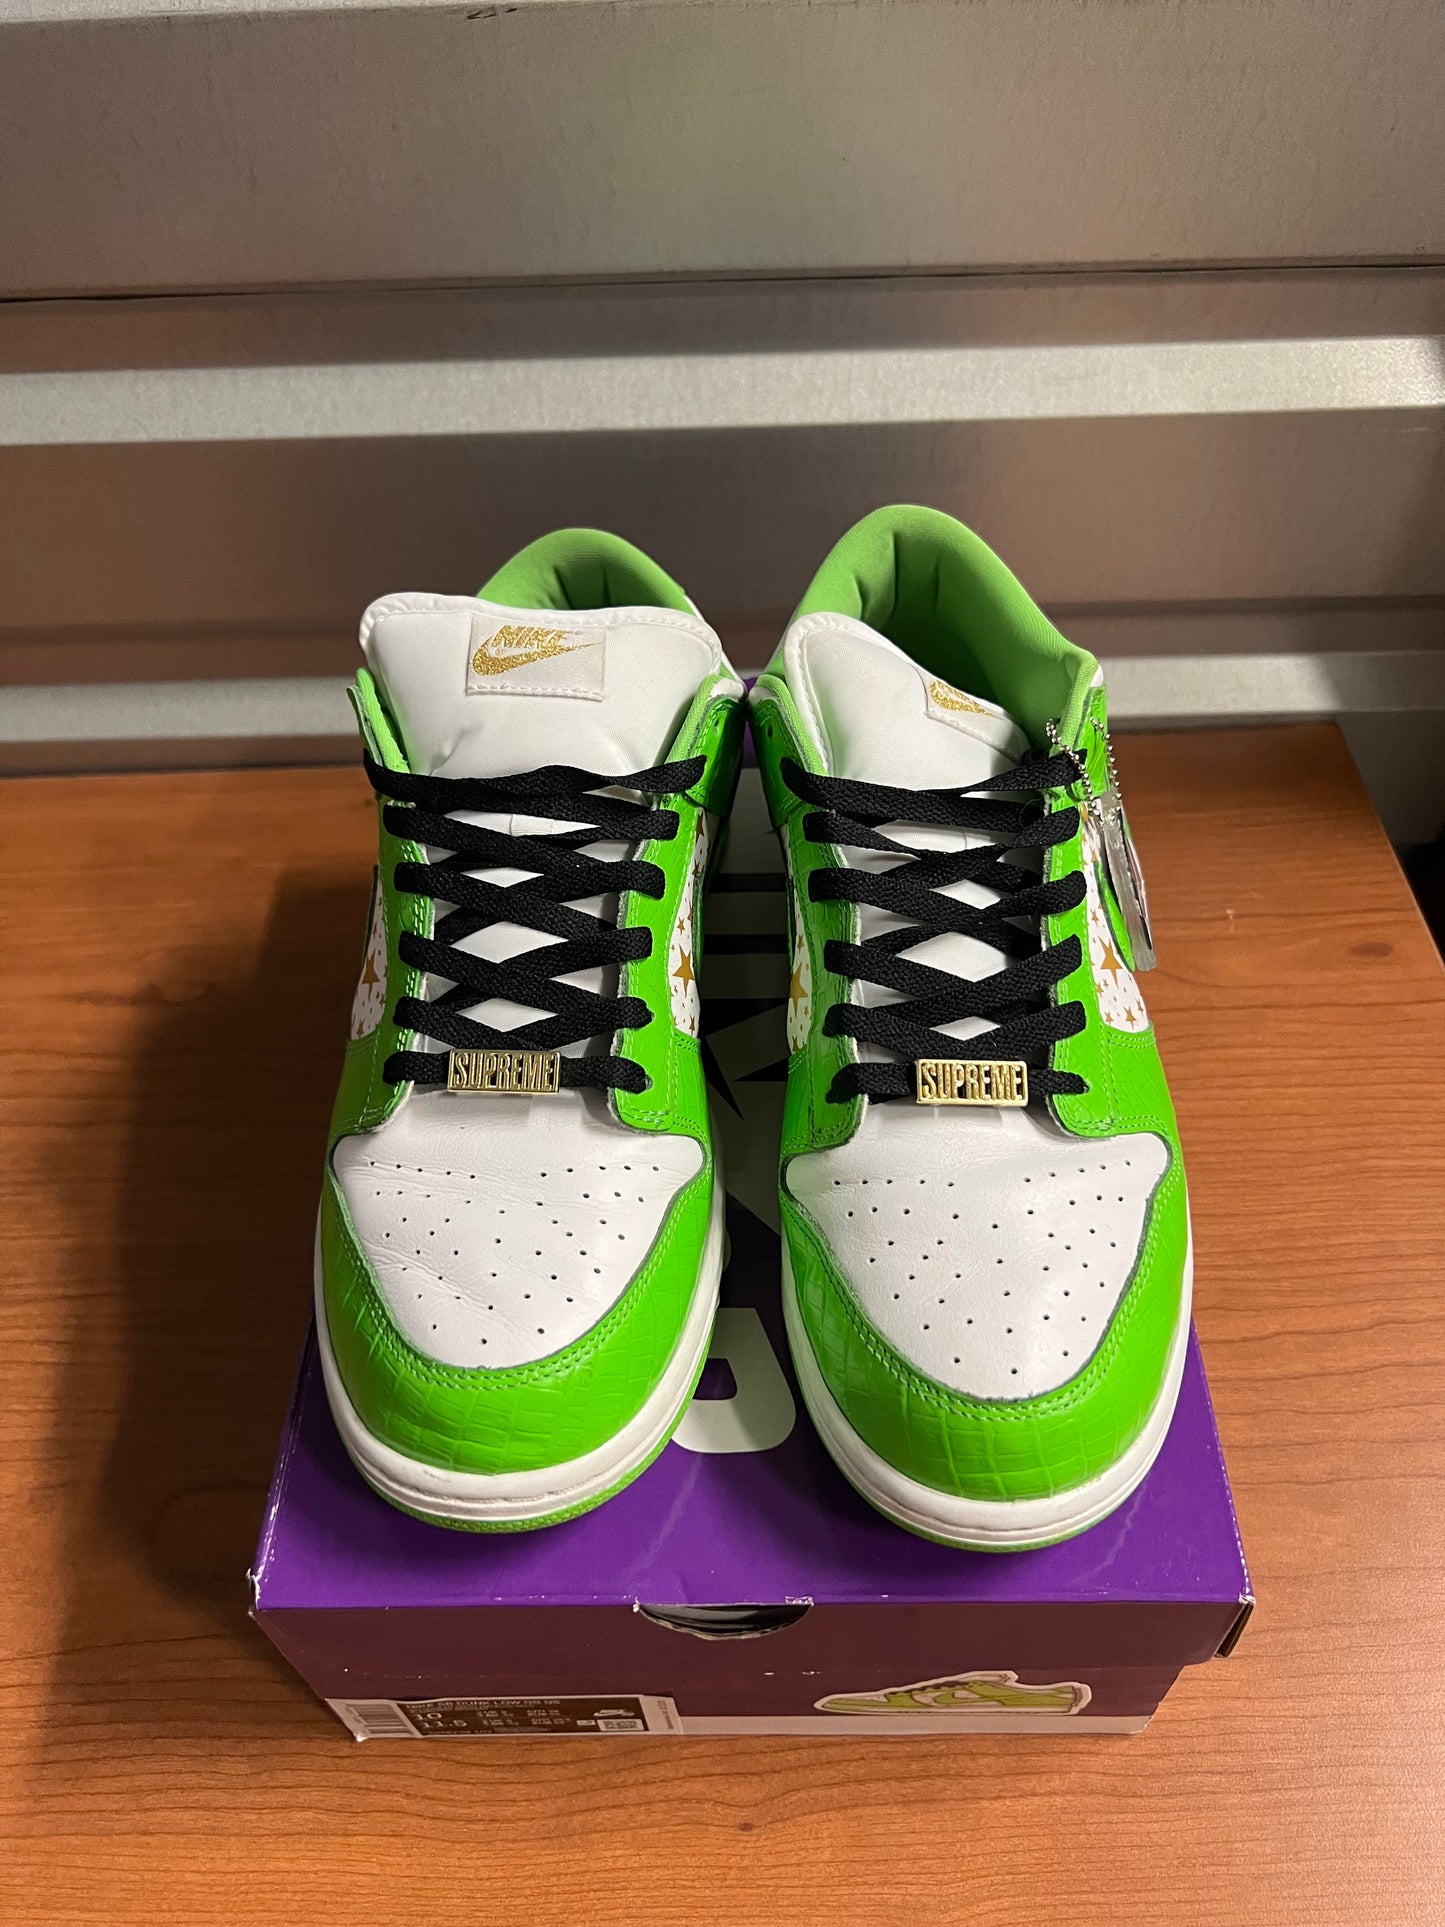 Nike Dunk Low "Supreme Mean Green"